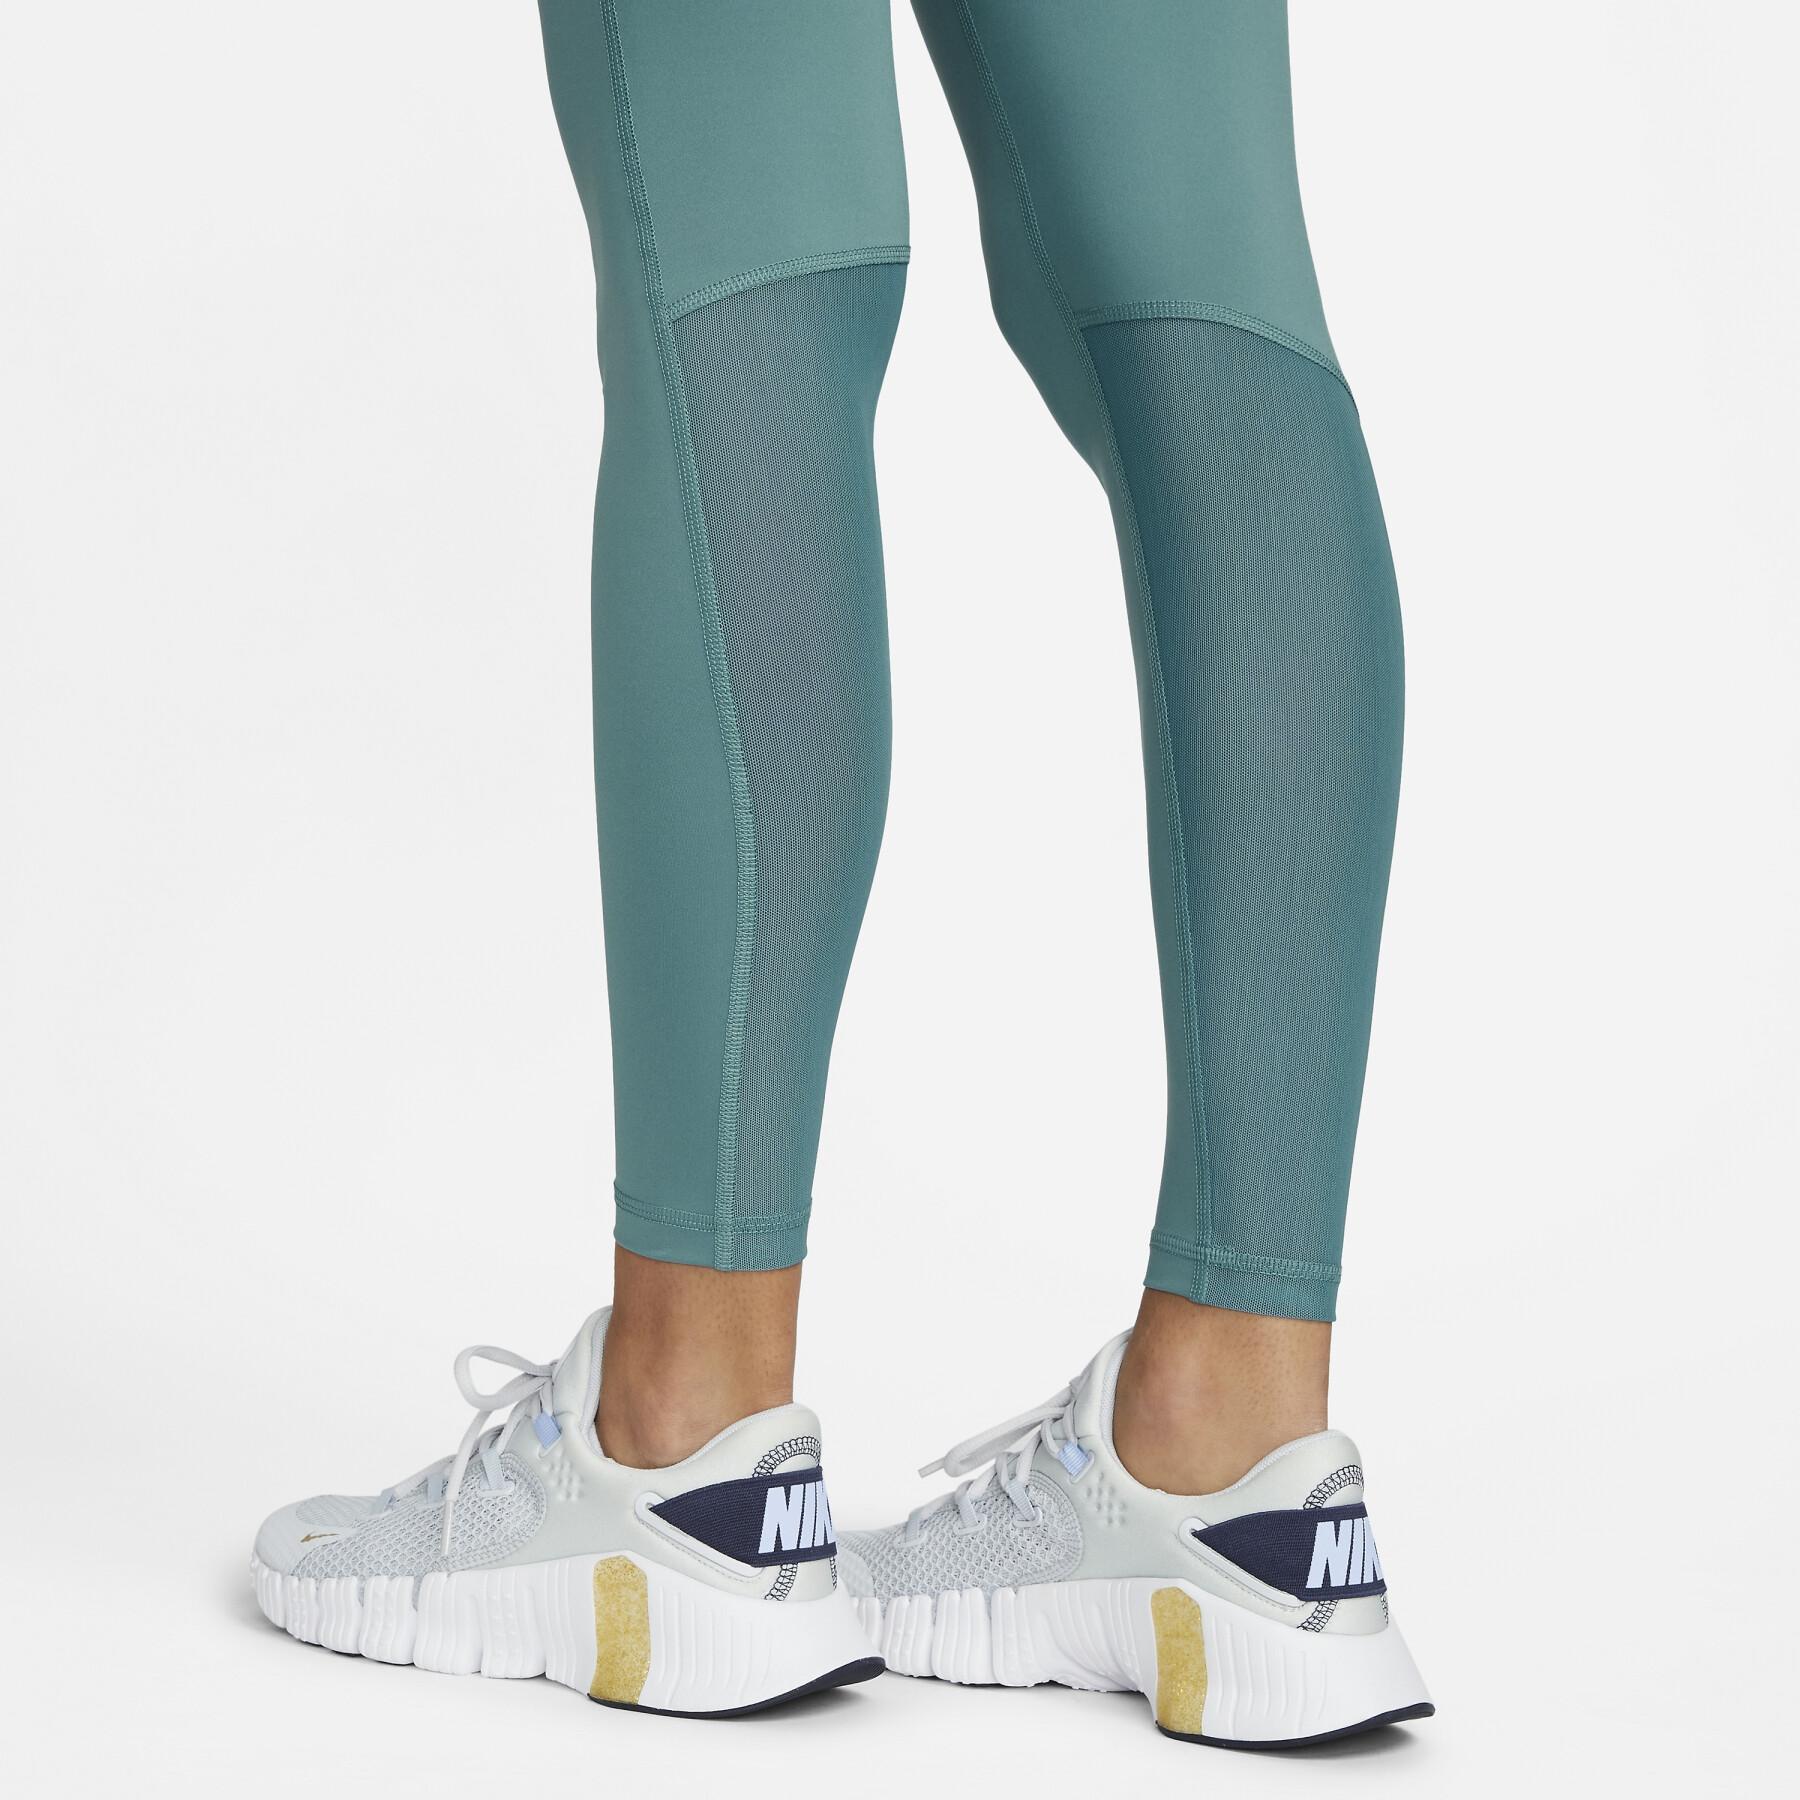 Legging woman Nike Pro 365 - Leggings - Women's clothing - Fitness